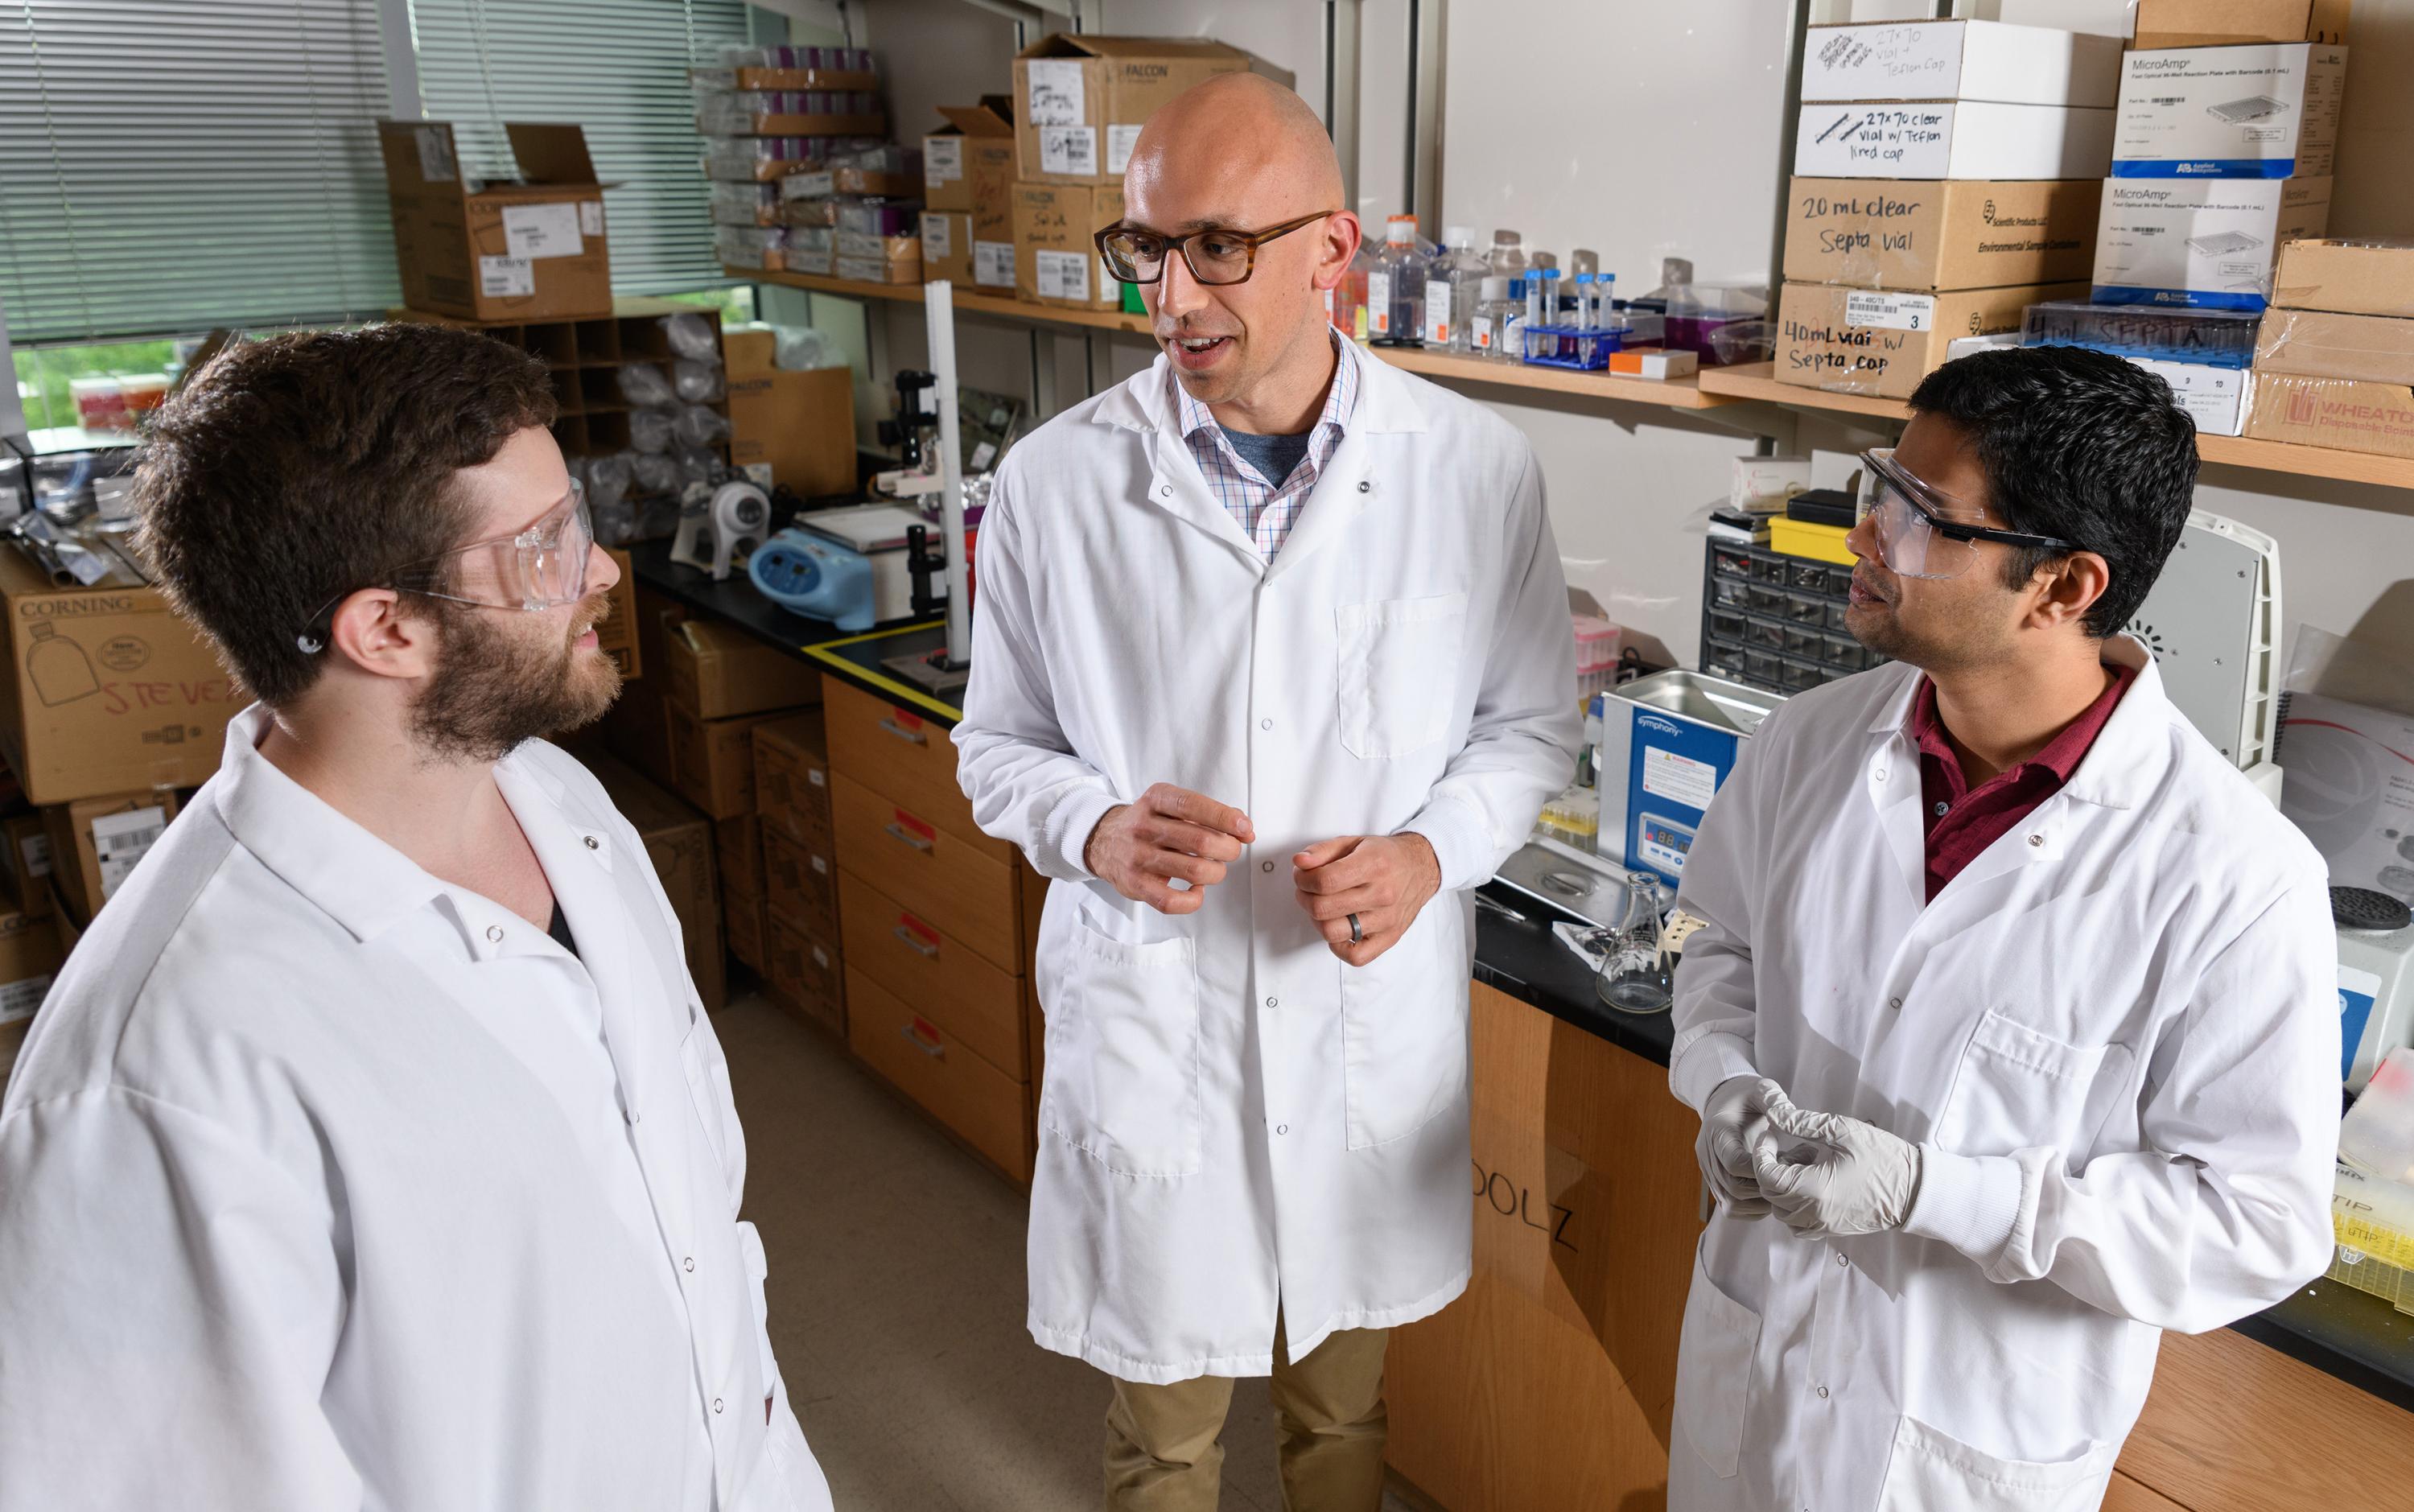 Researchers Jeremy Caplin, Christopher Johnson and Pranav Kalelkar discuss their work on a new hydrogel-based treatment for bone infections. (Photo: Rob Felt, Georgia Tech)